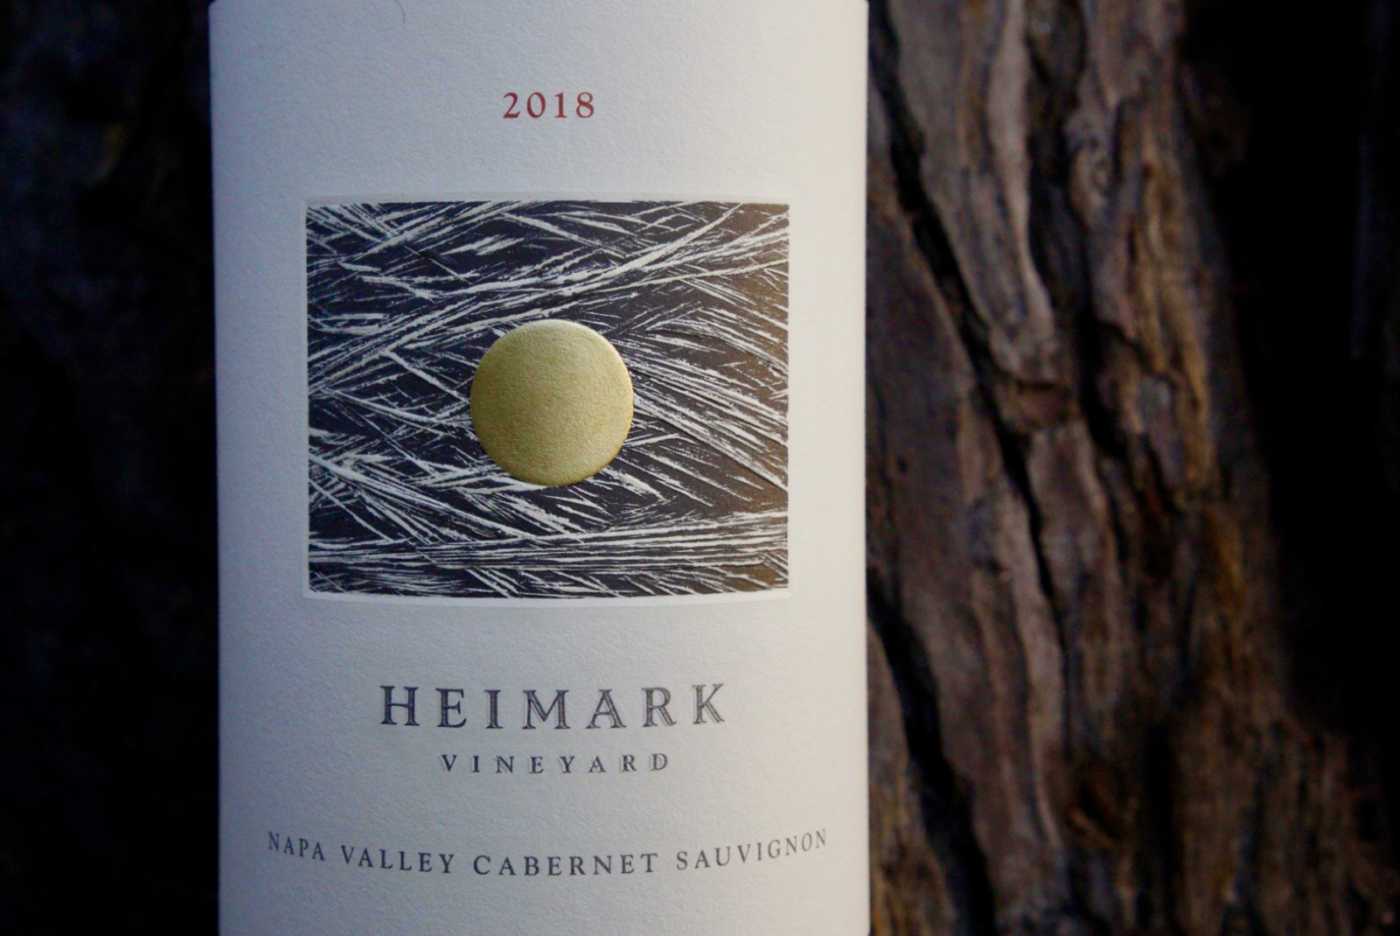 Heimark Napa Valley Cabernet Sauvignon 2018 wine bottle label